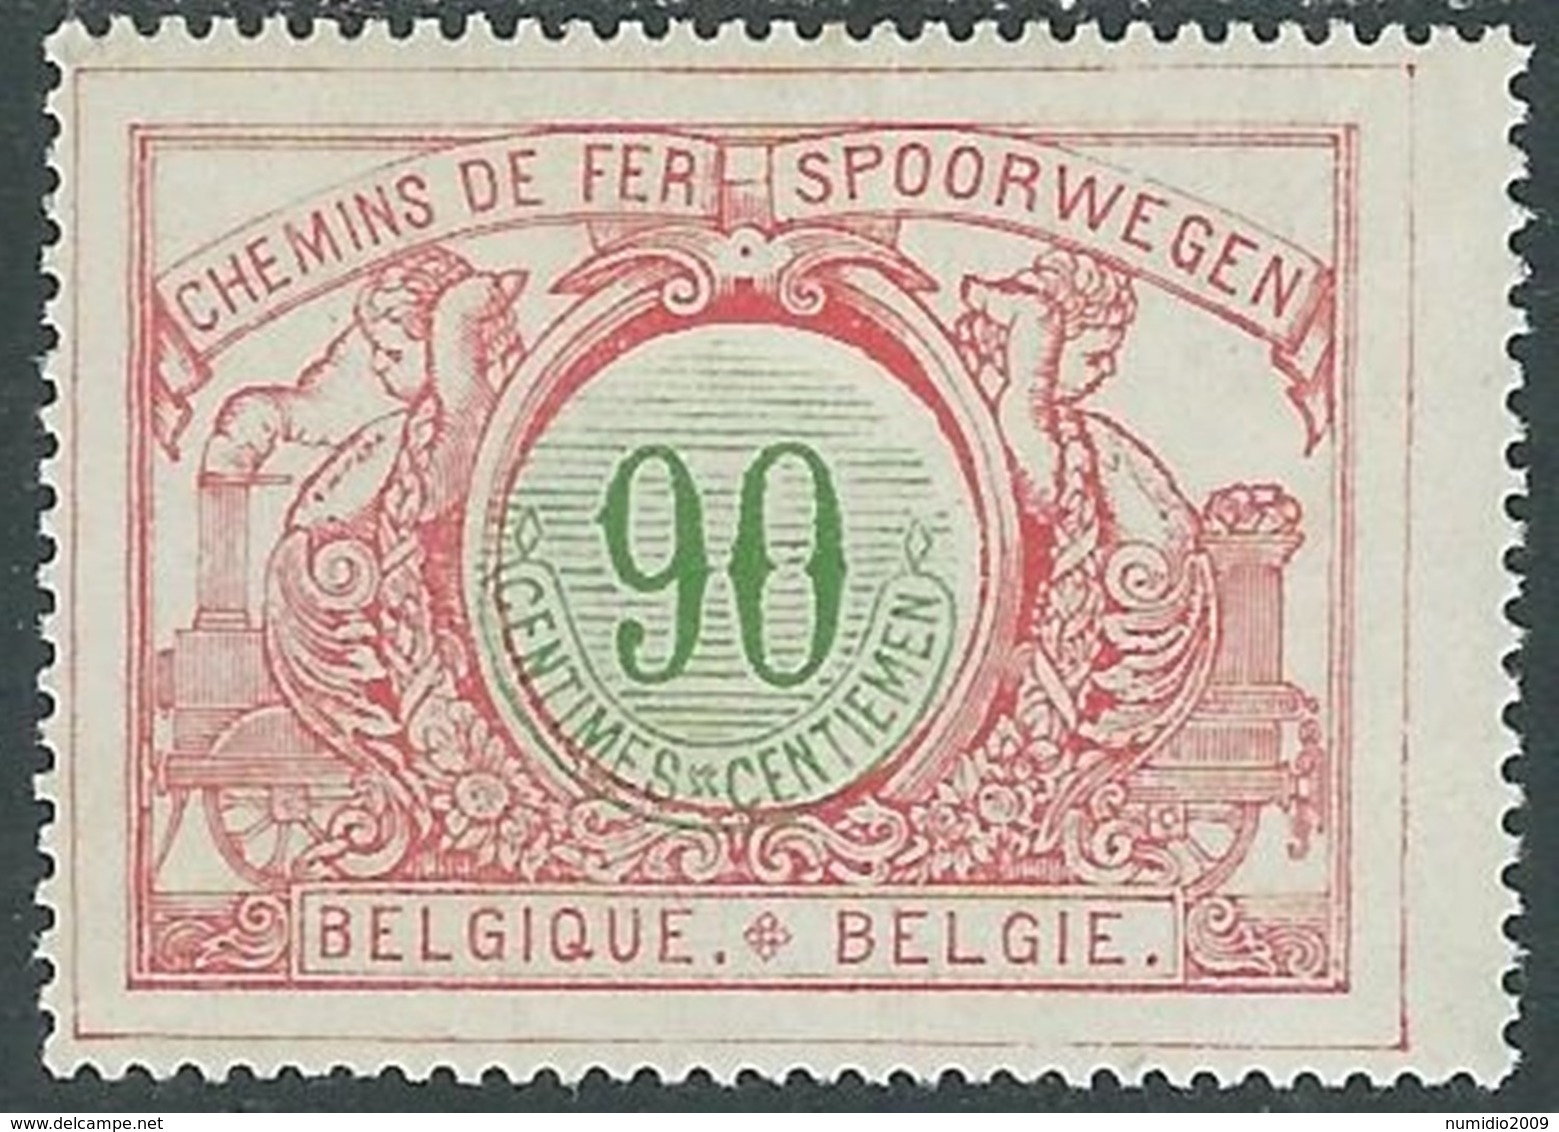 1902-05 BELGIO PACCHI POSTALI 90 CENT MH * - RB13-9 - Reisgoedzegels [BA]